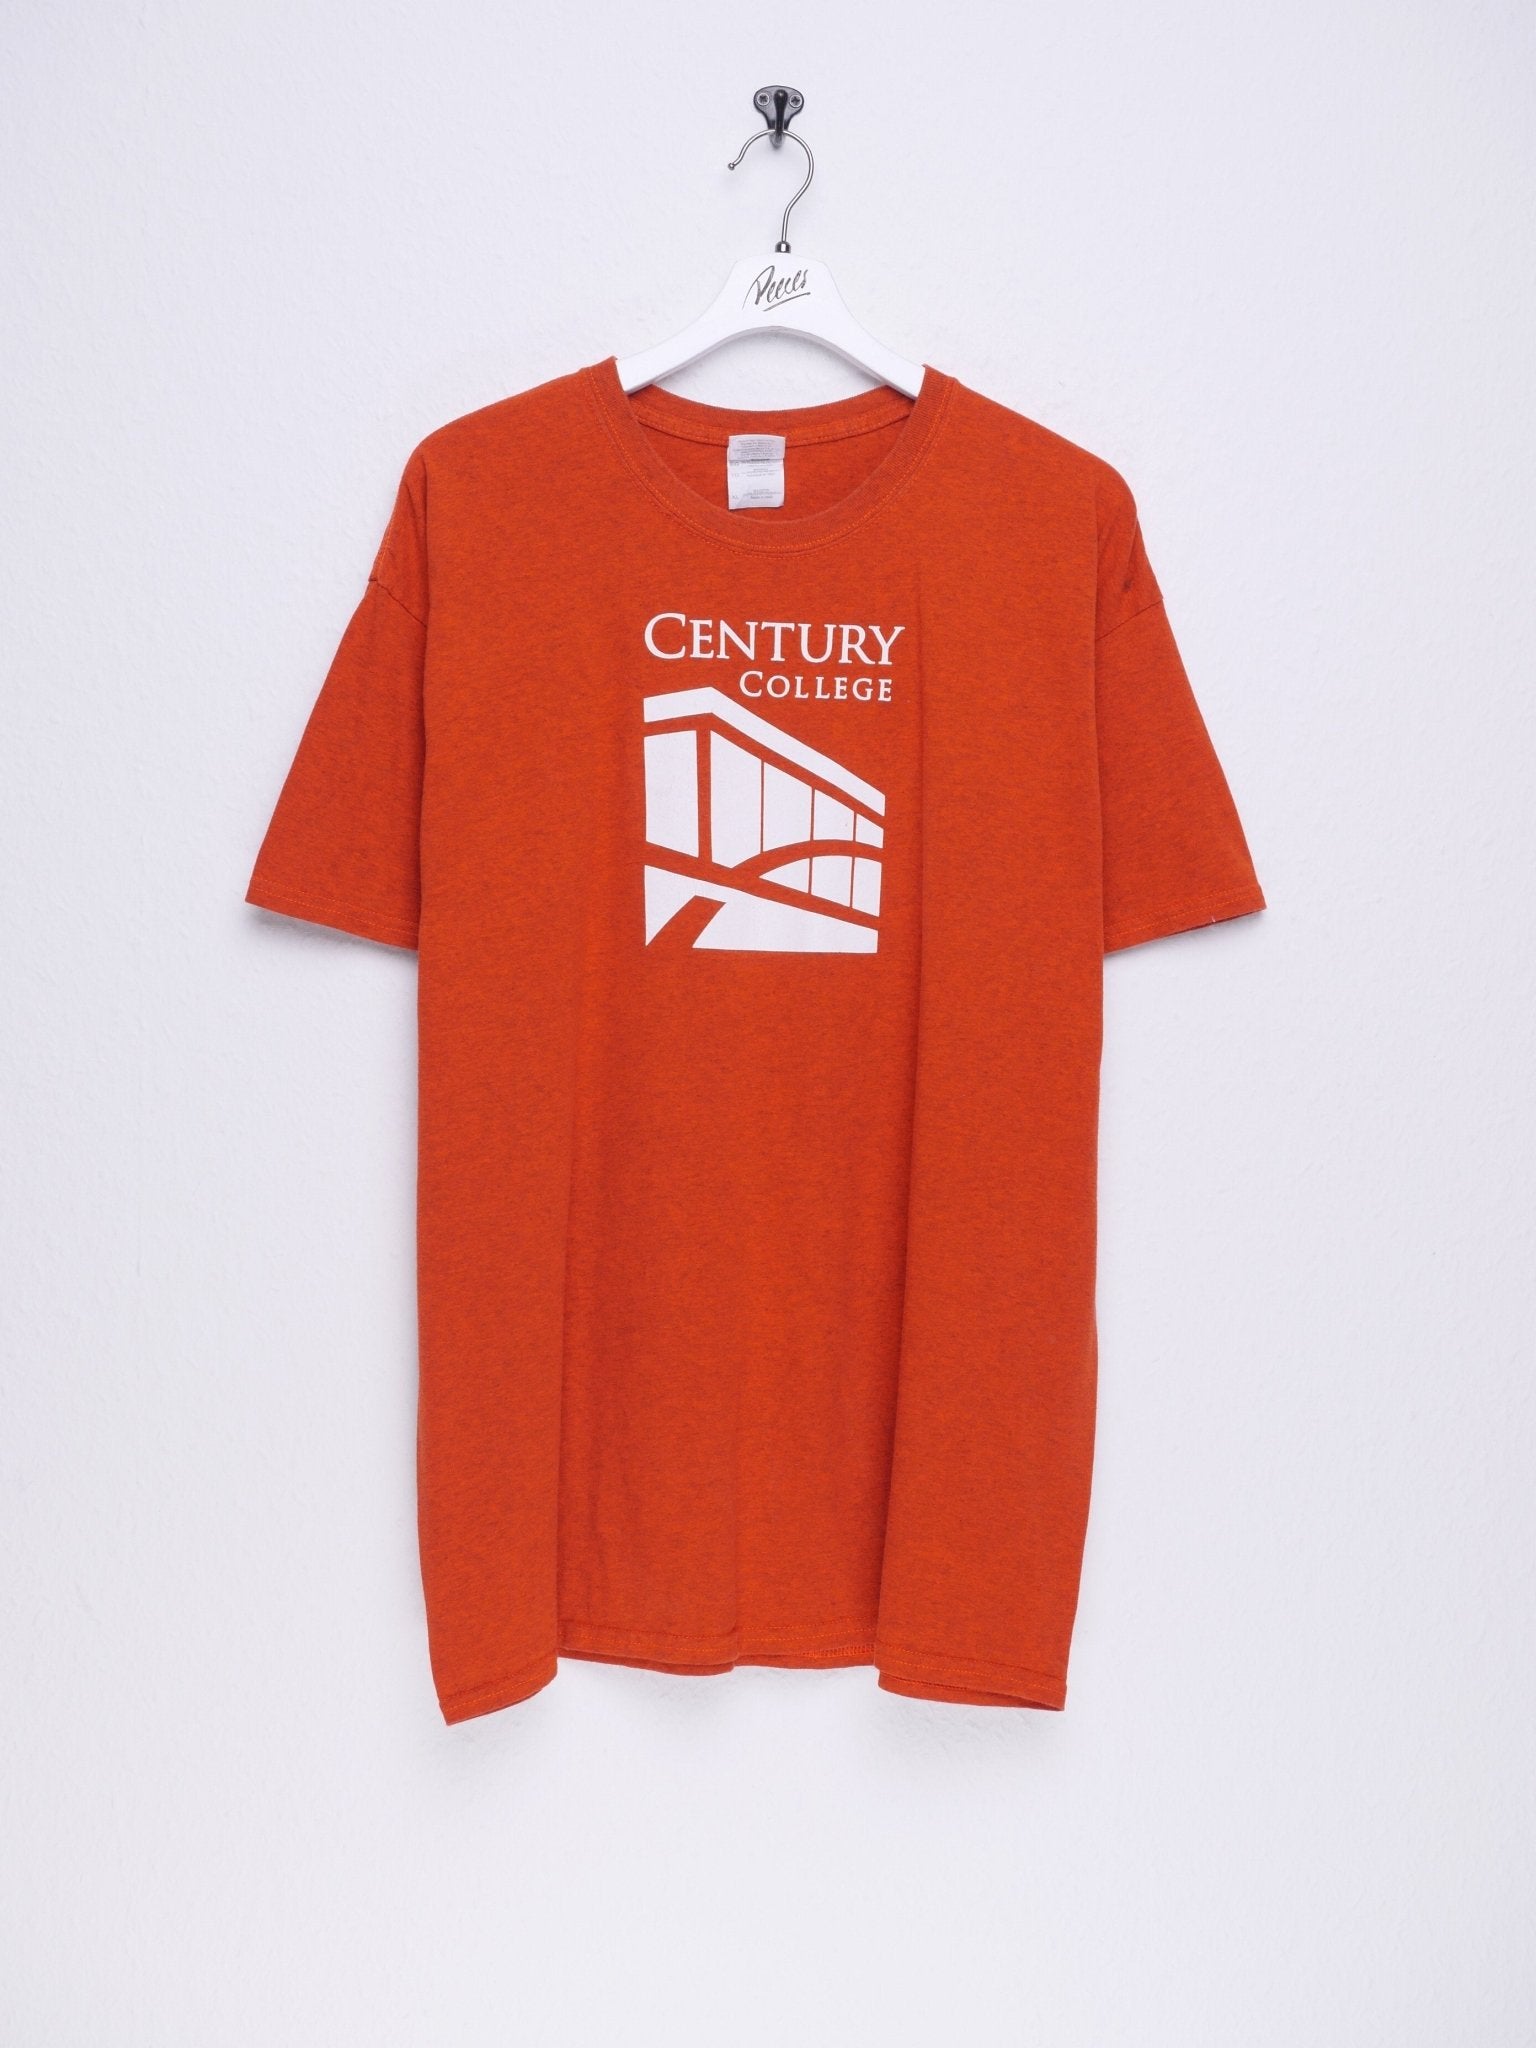 printed 'Century College' Orange Shirt - Peeces